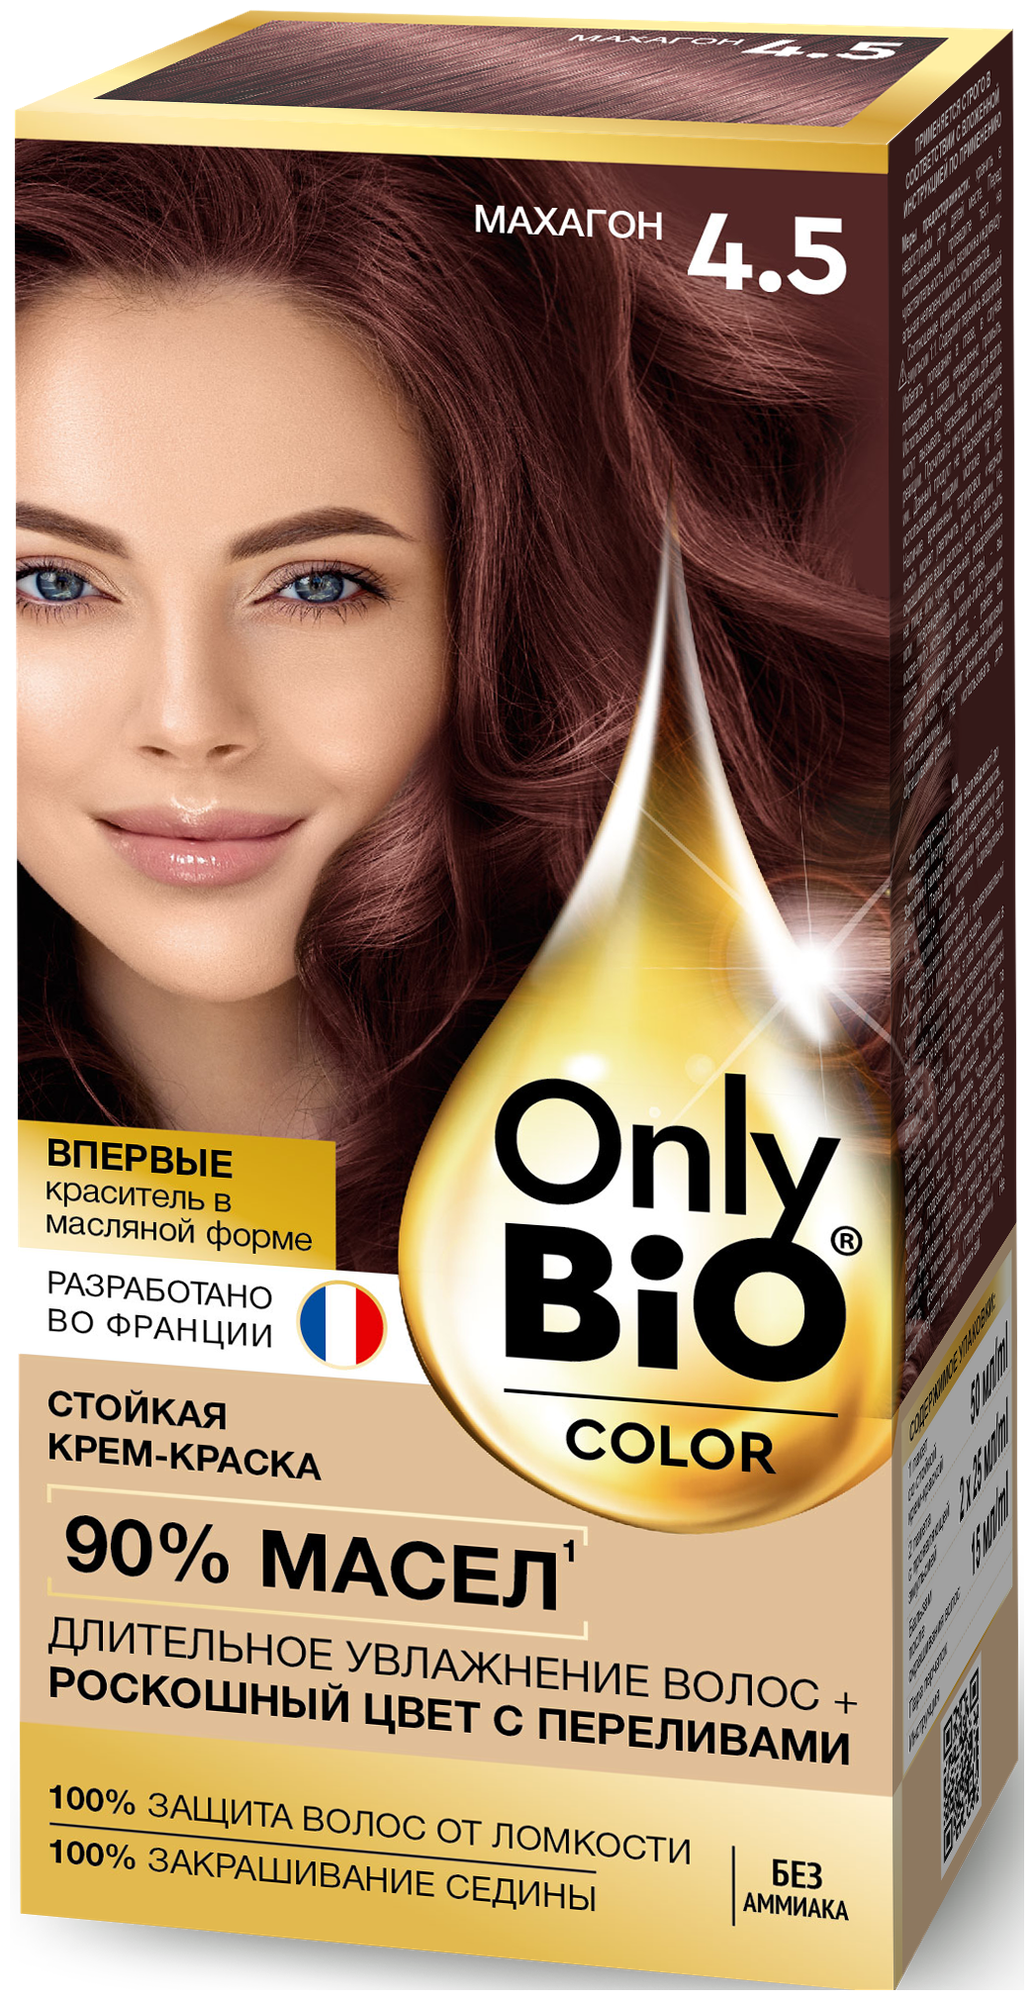 Only Bio Крем-краска для волос Color, 4.5 махагон, 115 мл